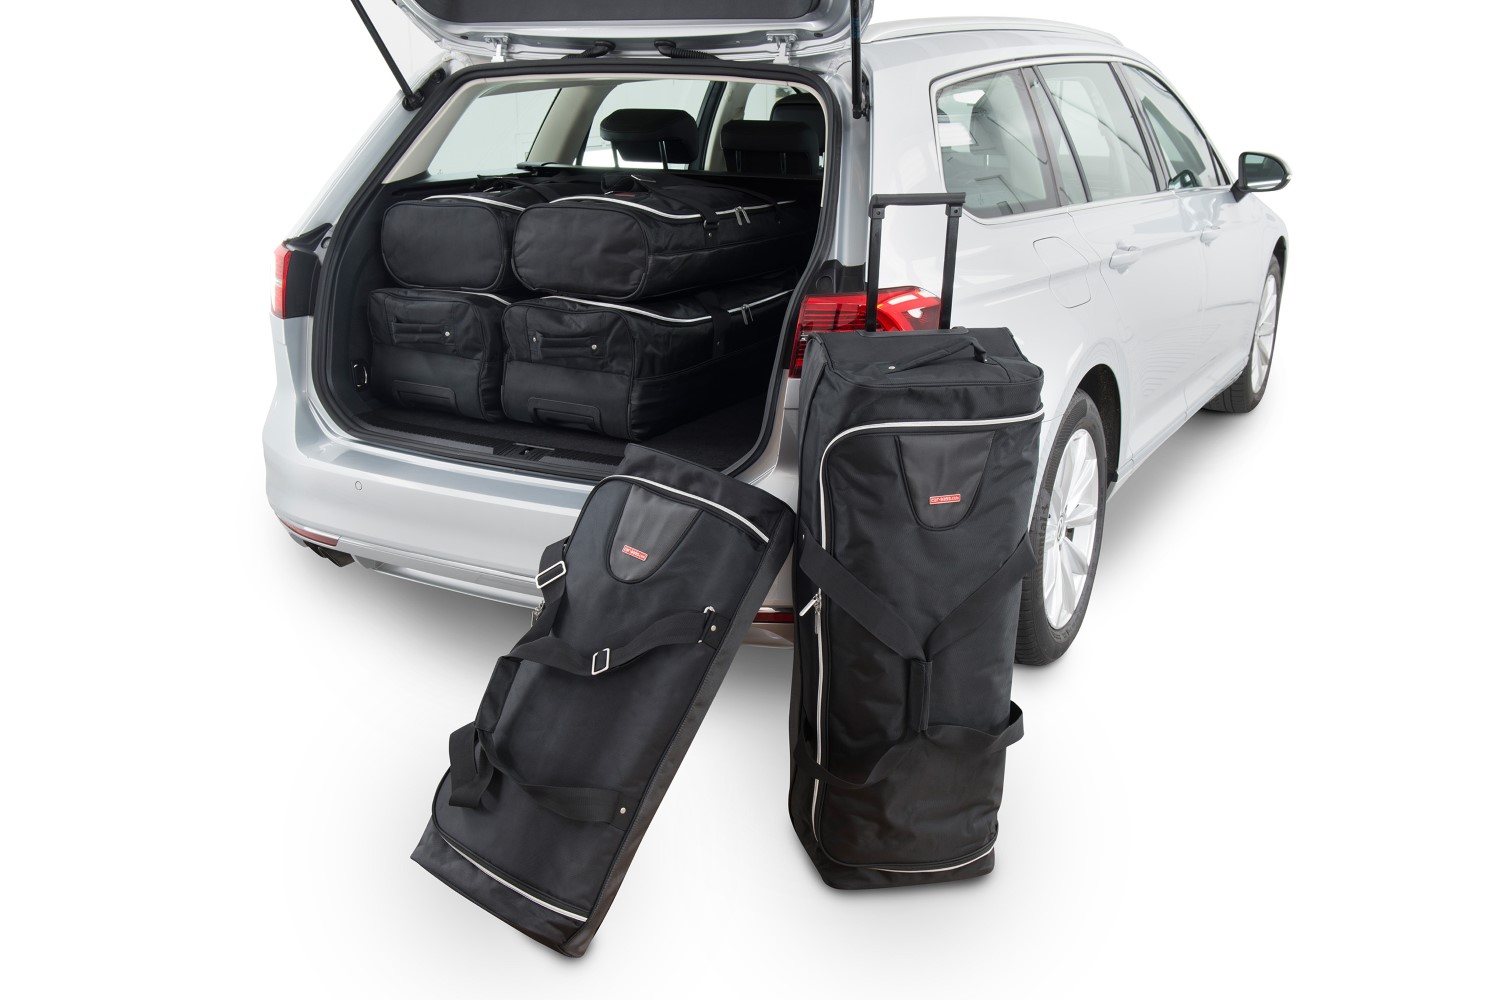 Design your own custom cricket luggage | Kit bag, Bags, Sport bag